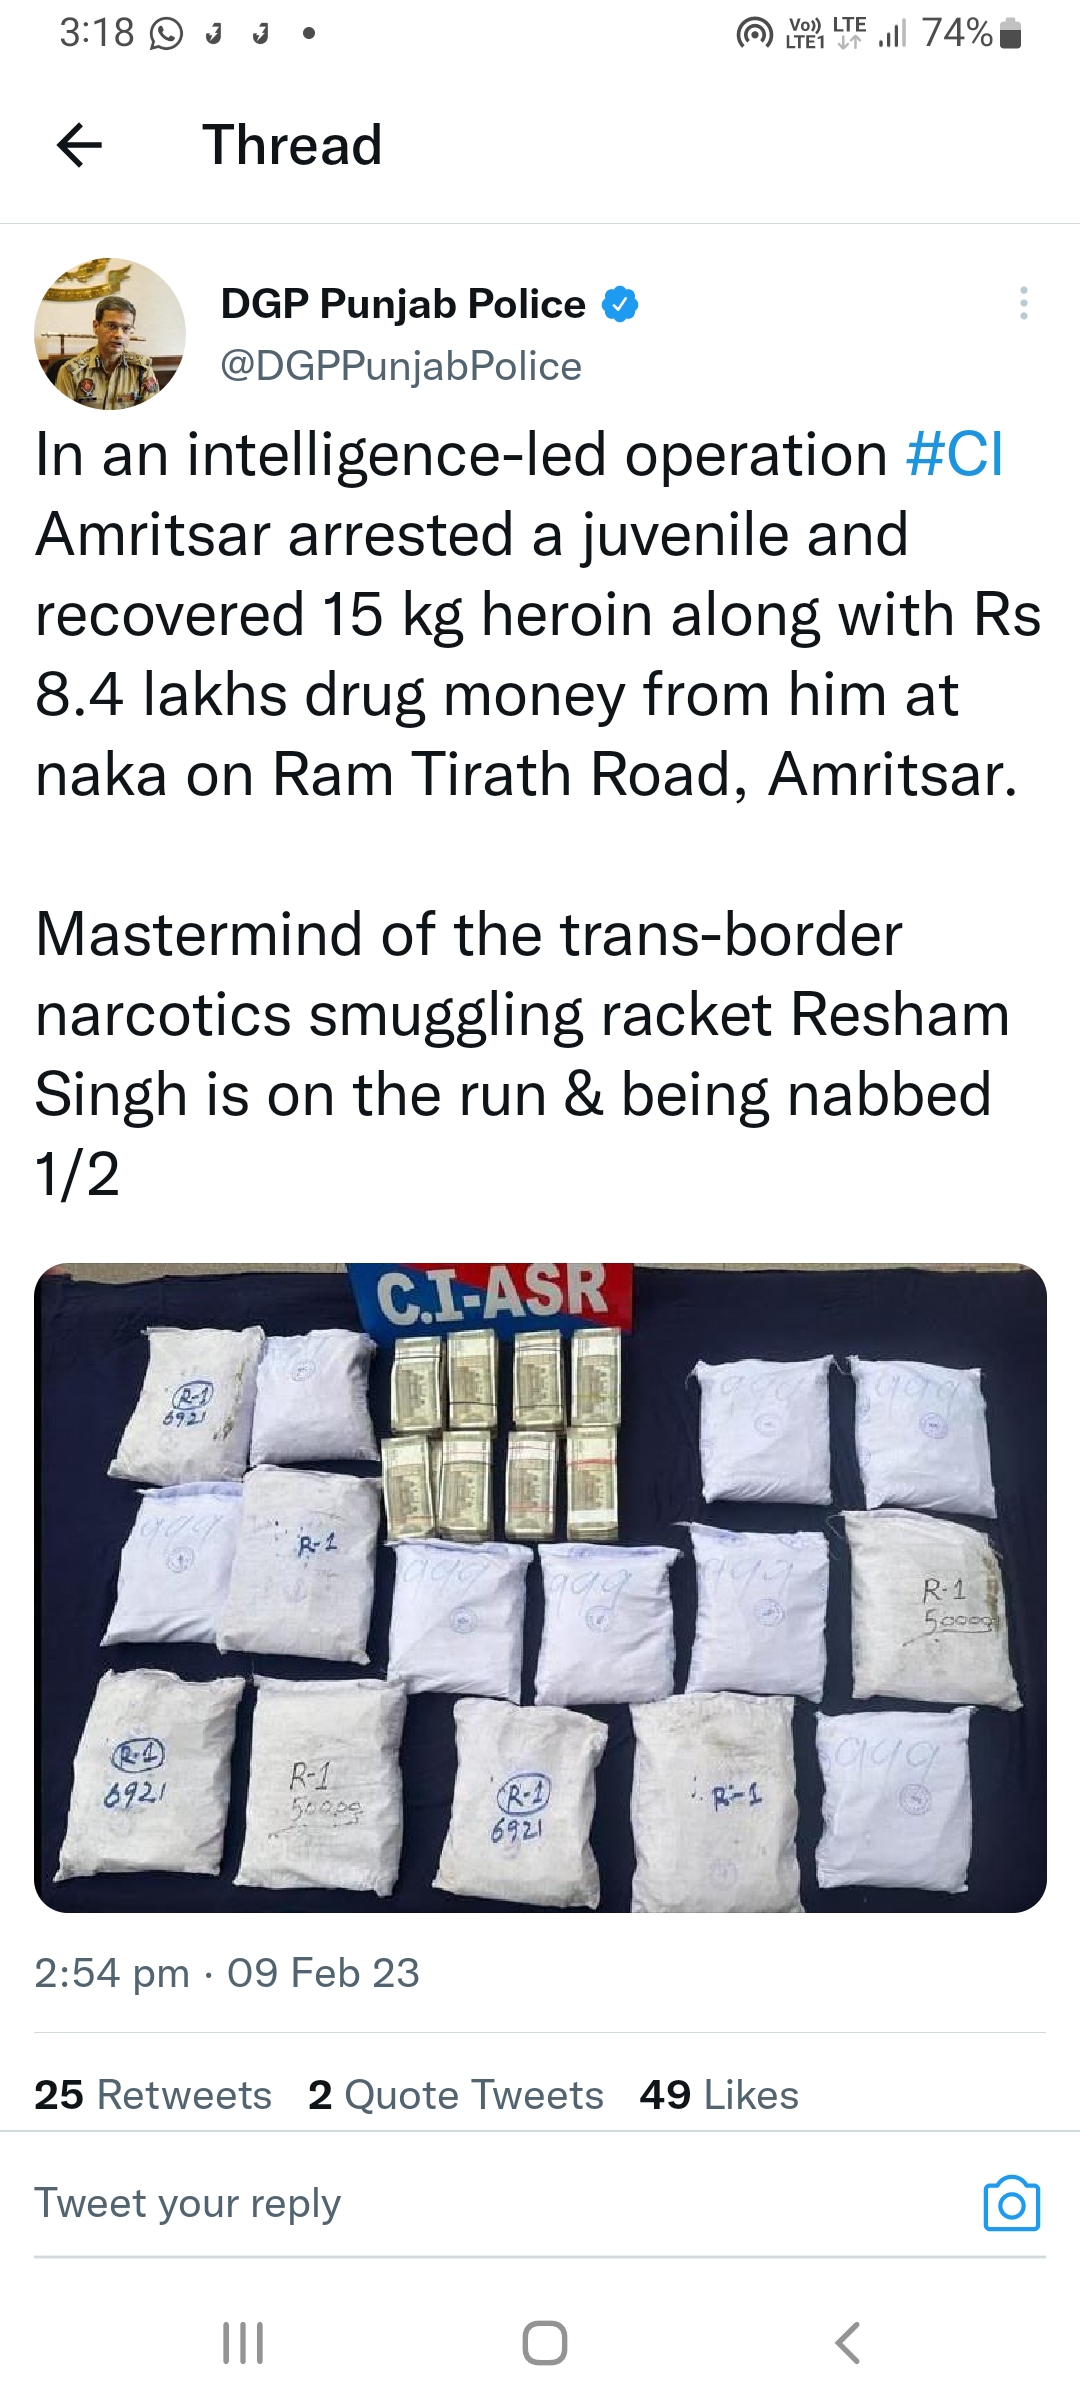 Amritsar police arrested a juvenile with 15 kg heroin,Rs 8.40 lakh drug money recovered